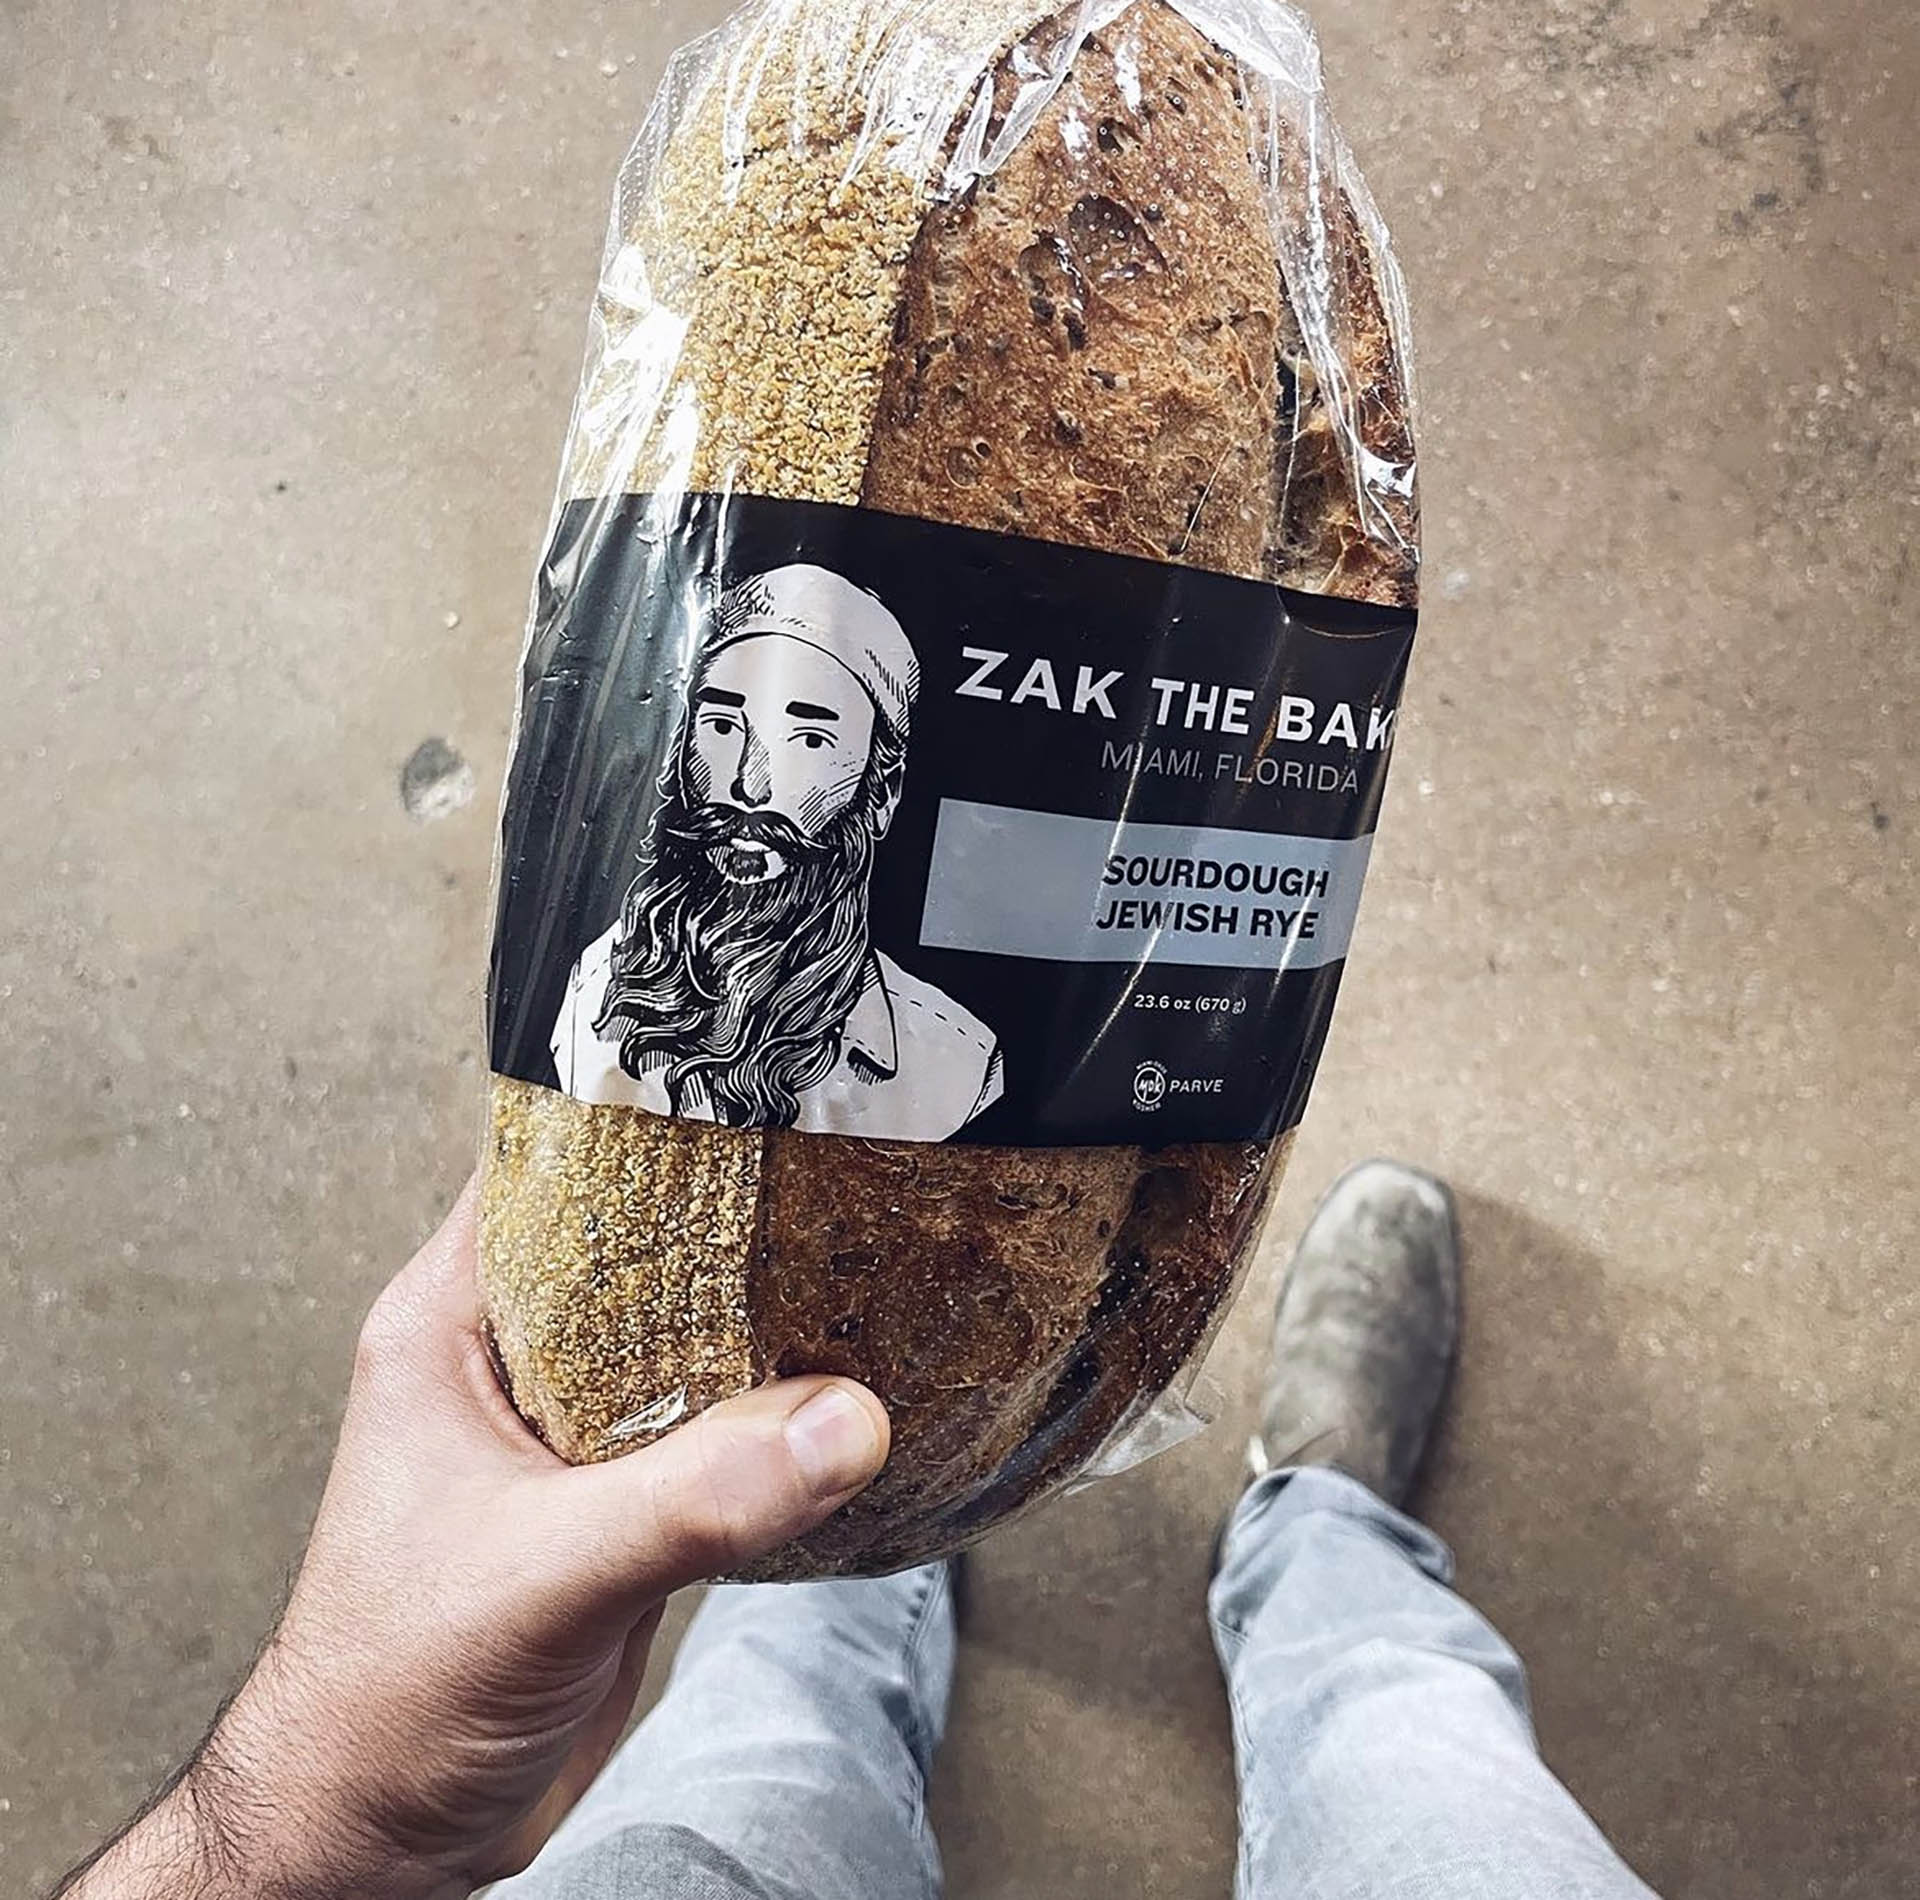 La panadería favorita de Miami, Zak the Baker (@zakthebaker)